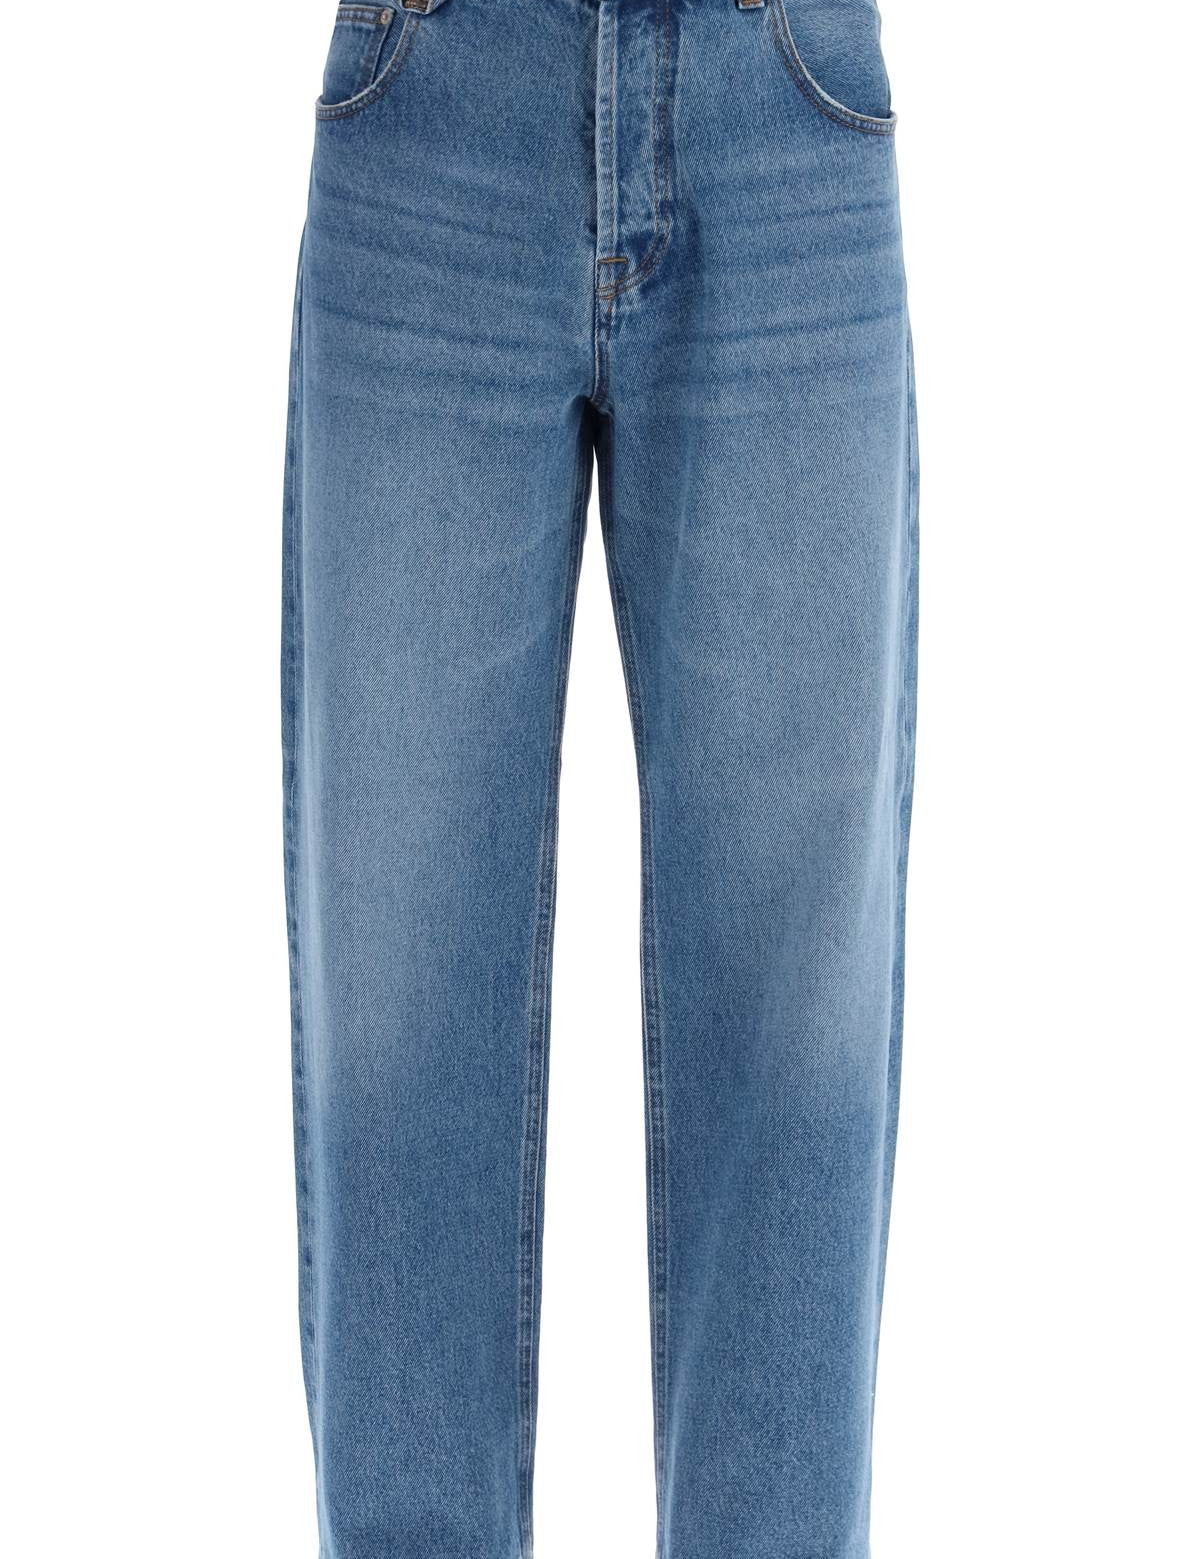 jacquemus-large-denim-jeans-from-nimes.jpg